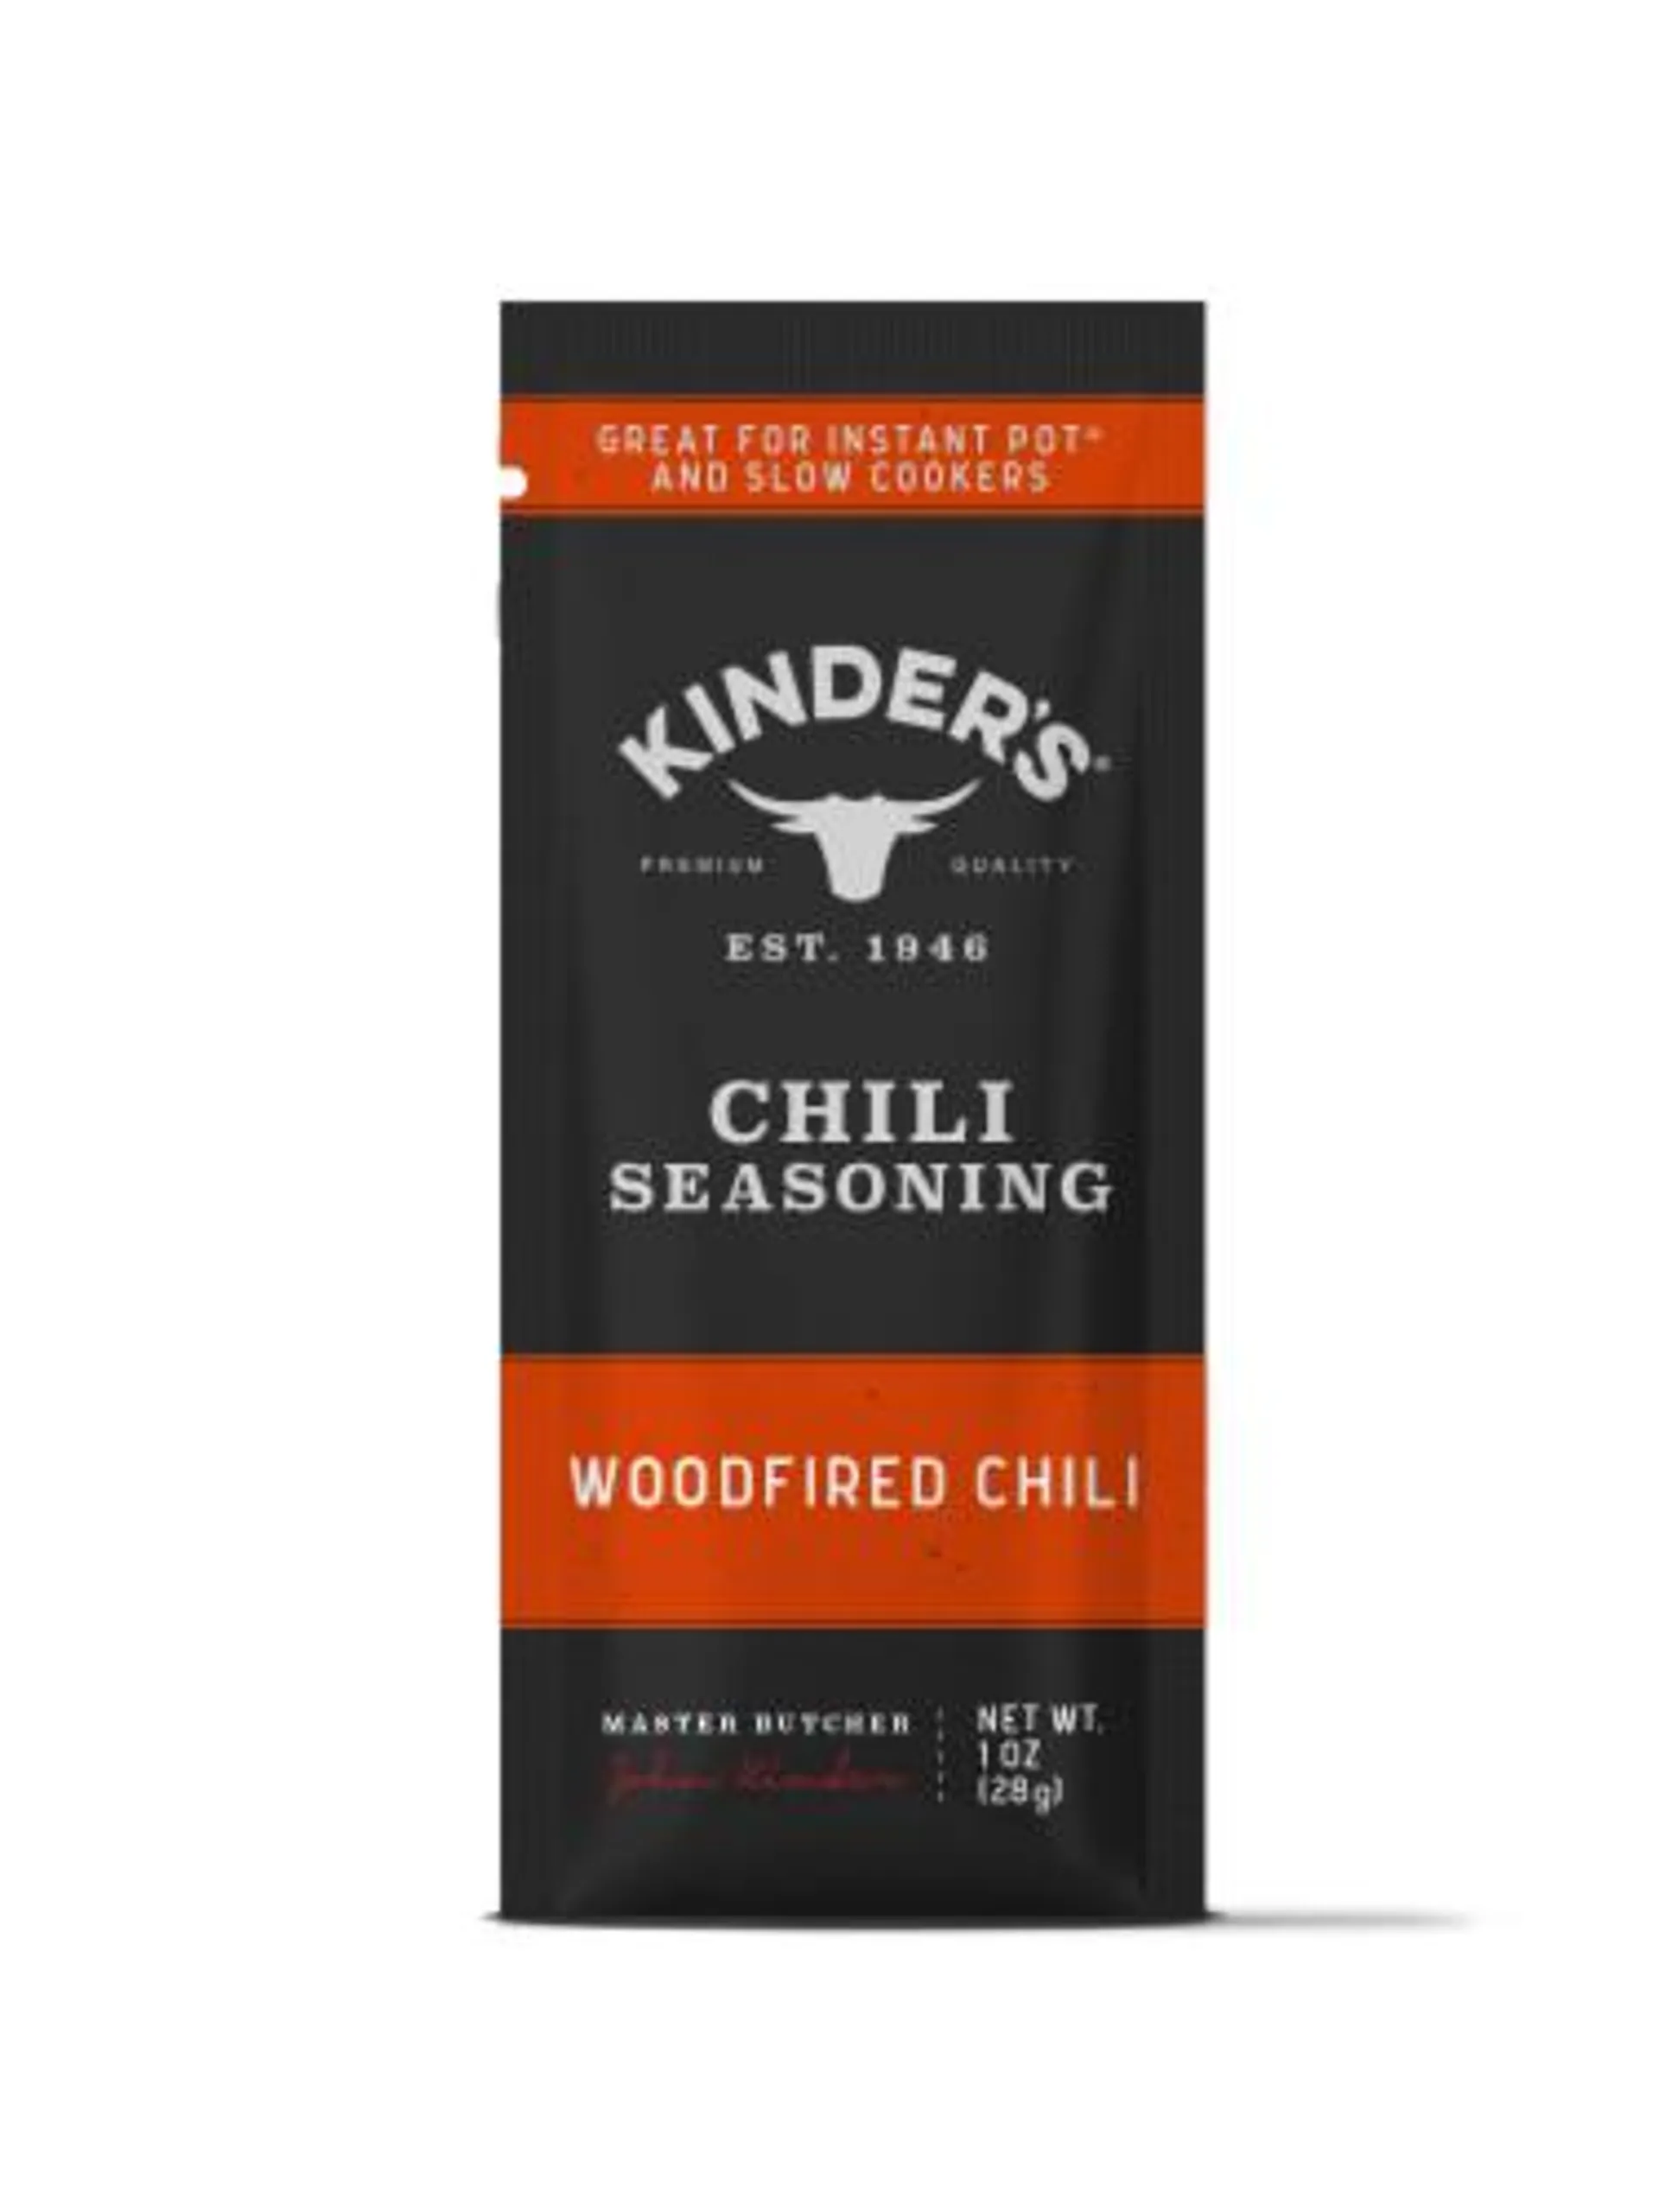 Kinder's® Woodfired Chili Seasoning